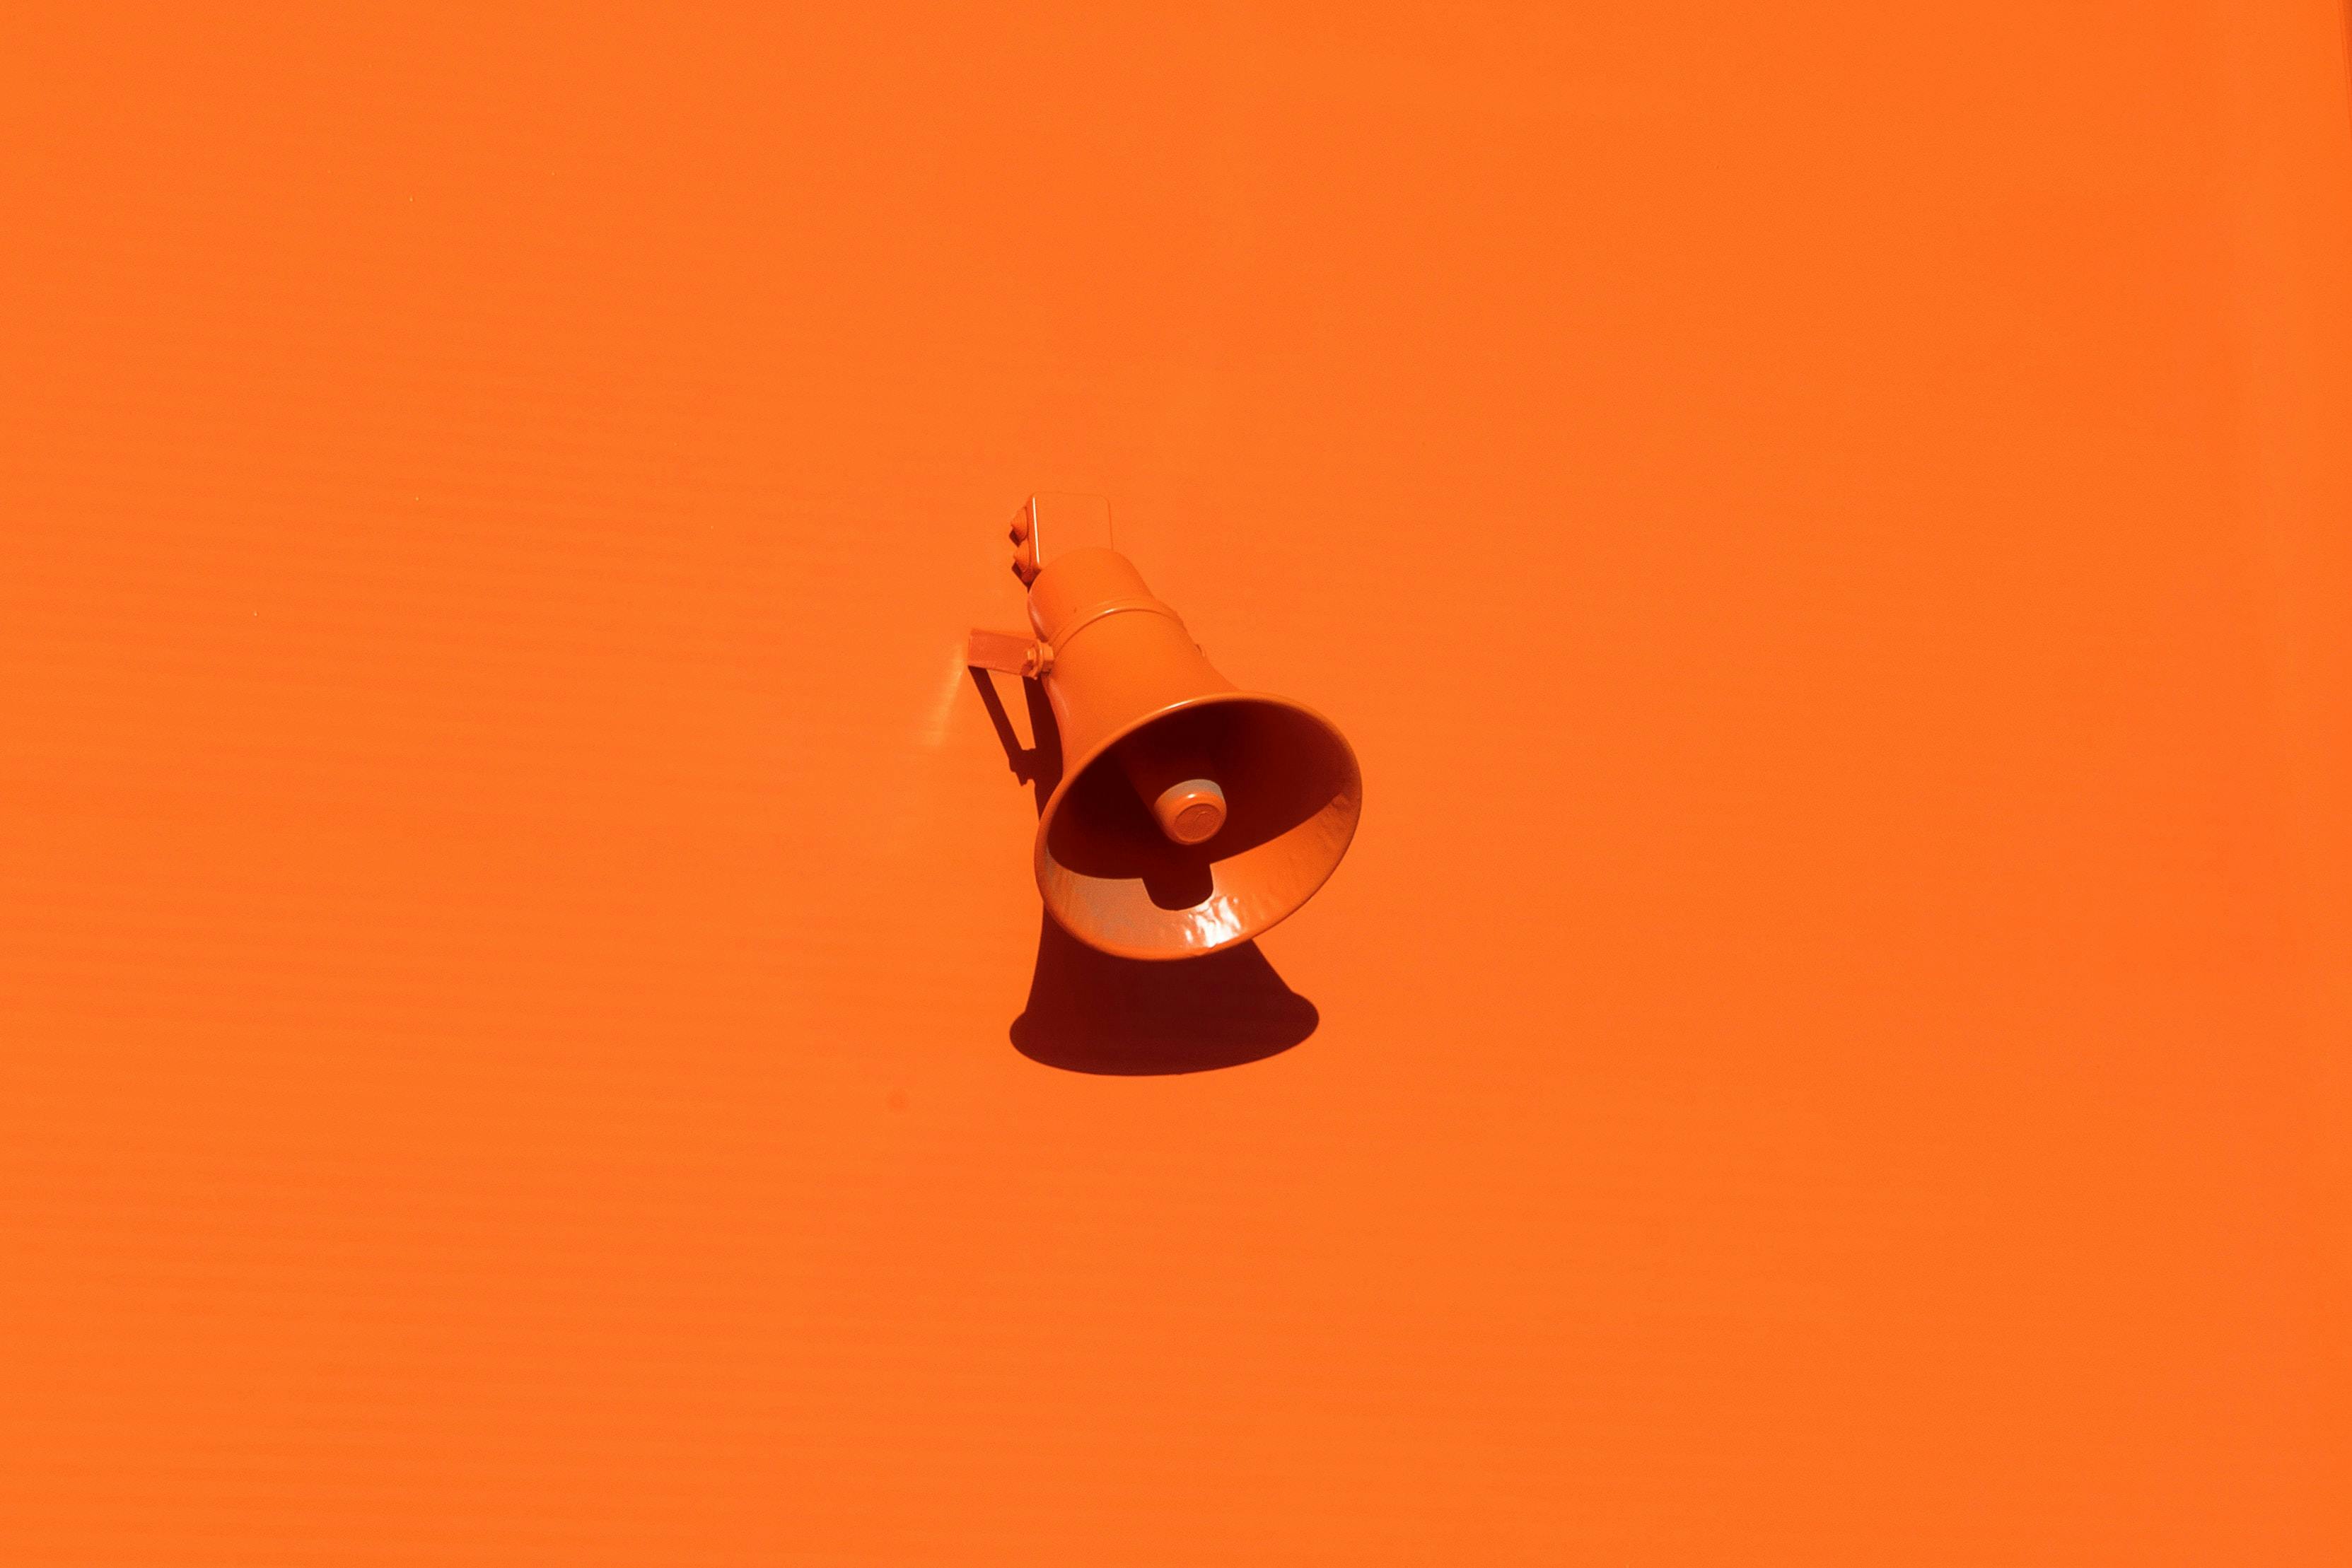 A 3D render of a megaphone on an orange background